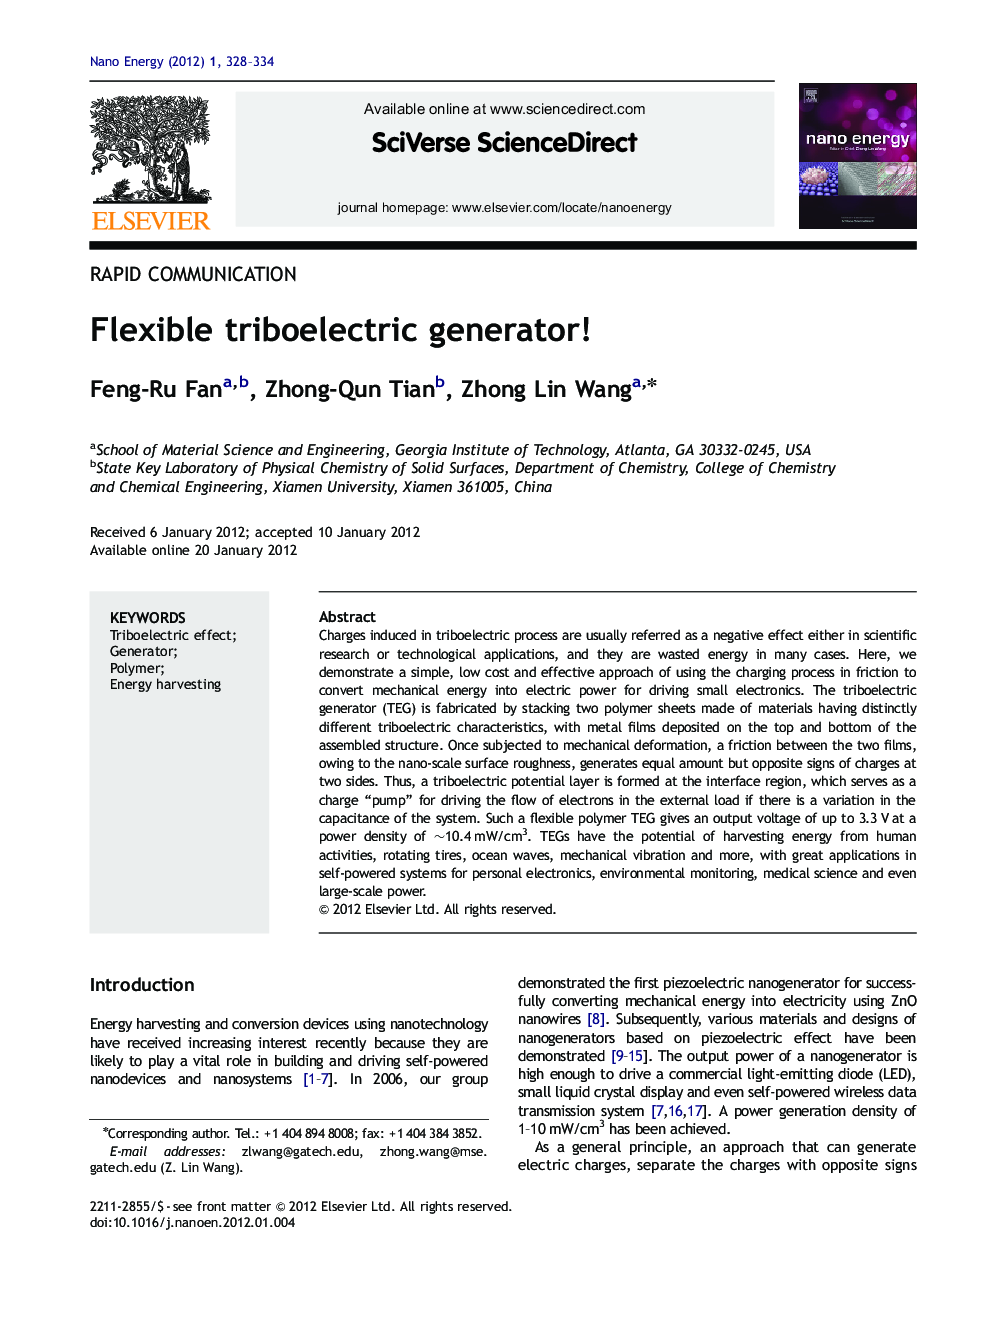 Flexible triboelectric generator